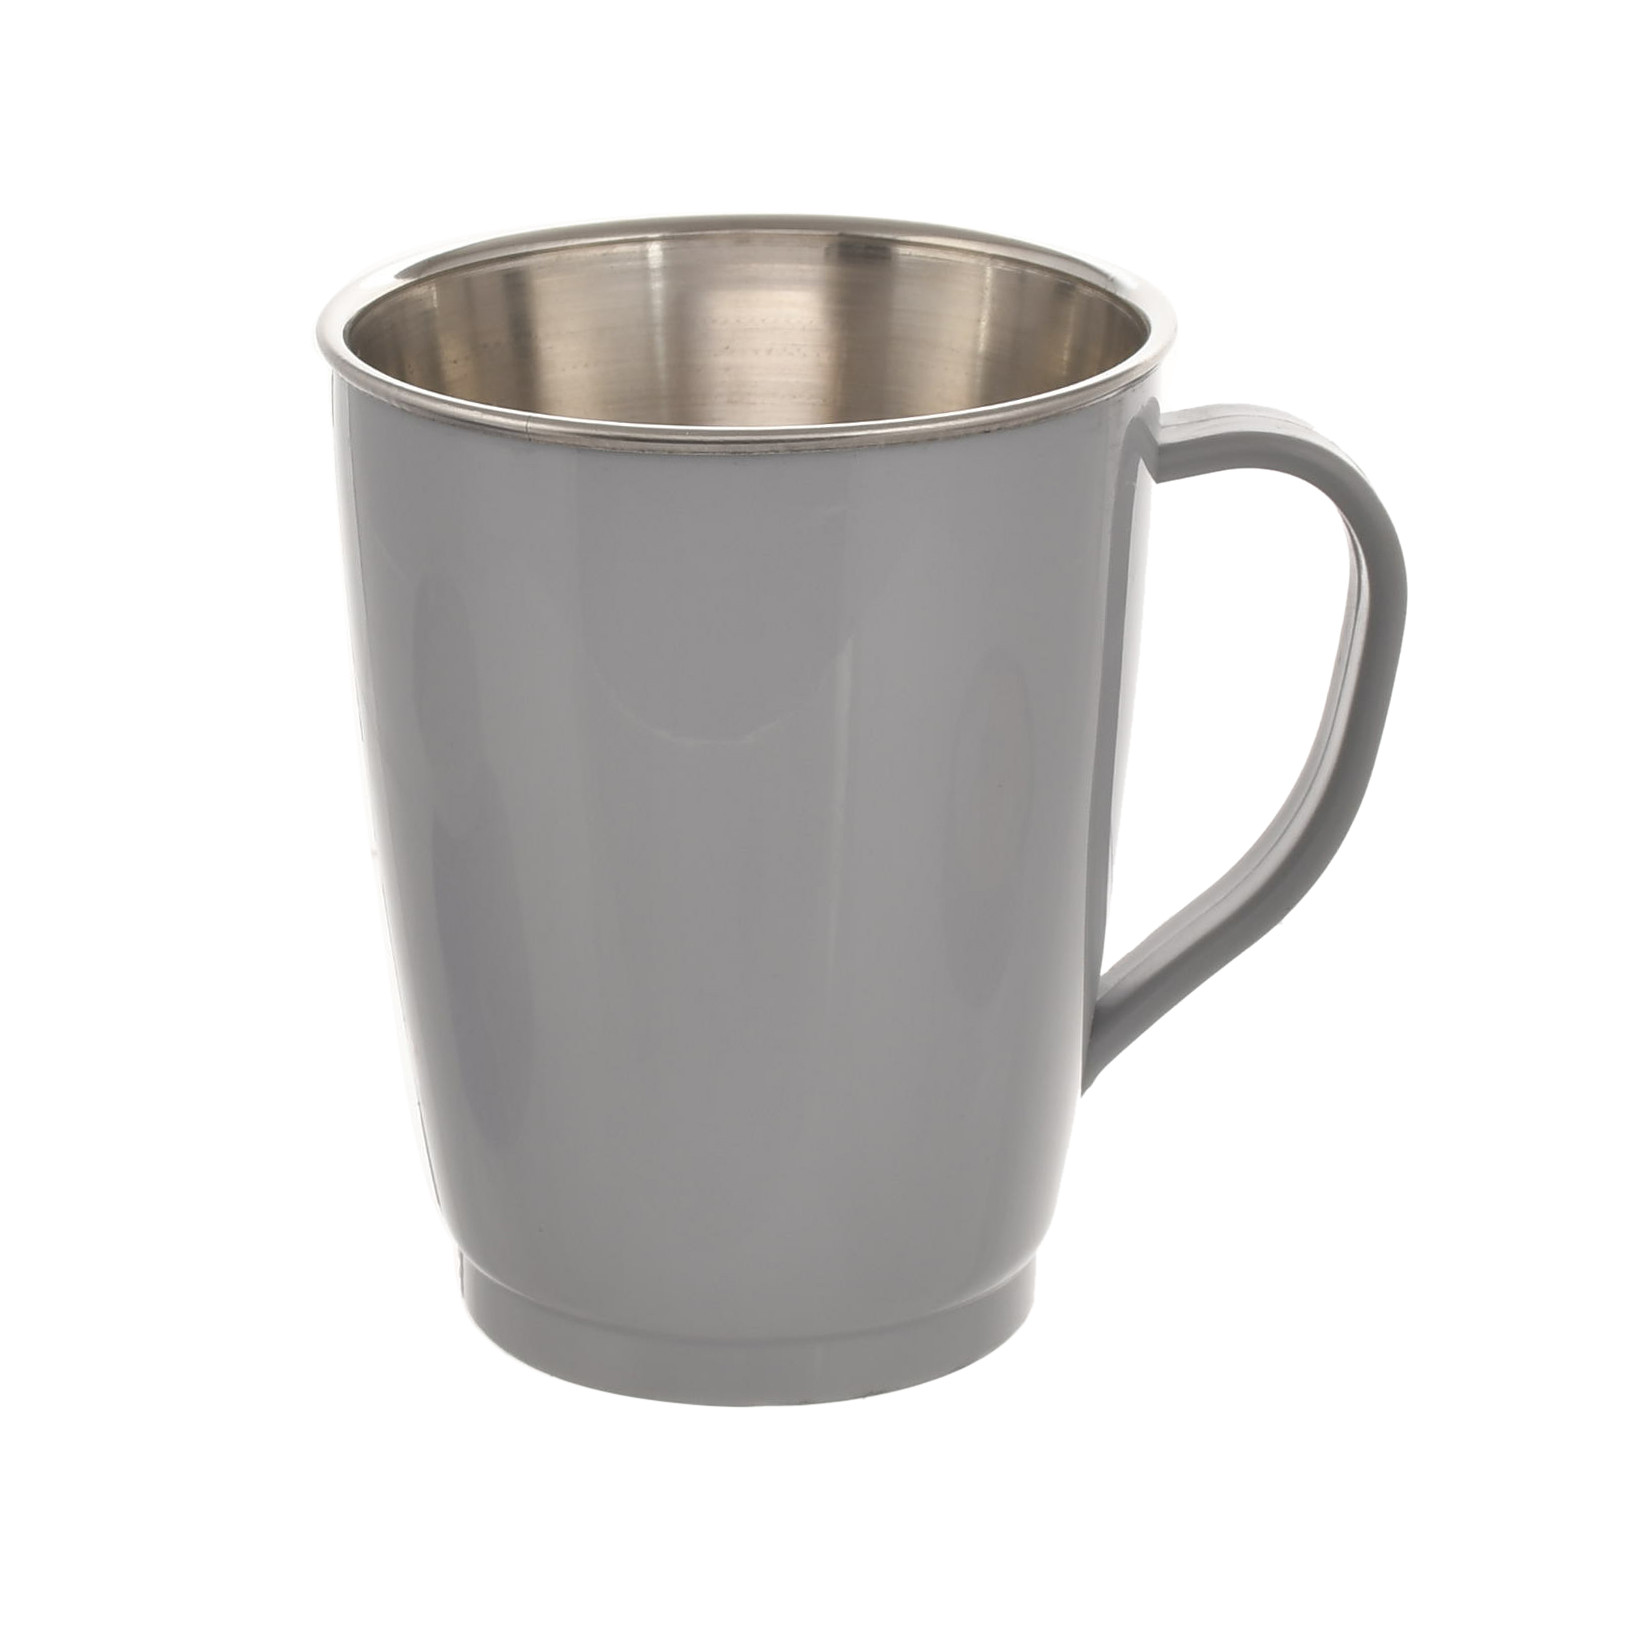 Kuber Industries Disney Printed Food Grade BPA Free Tea/Coffee Mug for Coffee Tea Cocoa, Camping Mugs with Lid, Pack of 6 (Grey & Red)